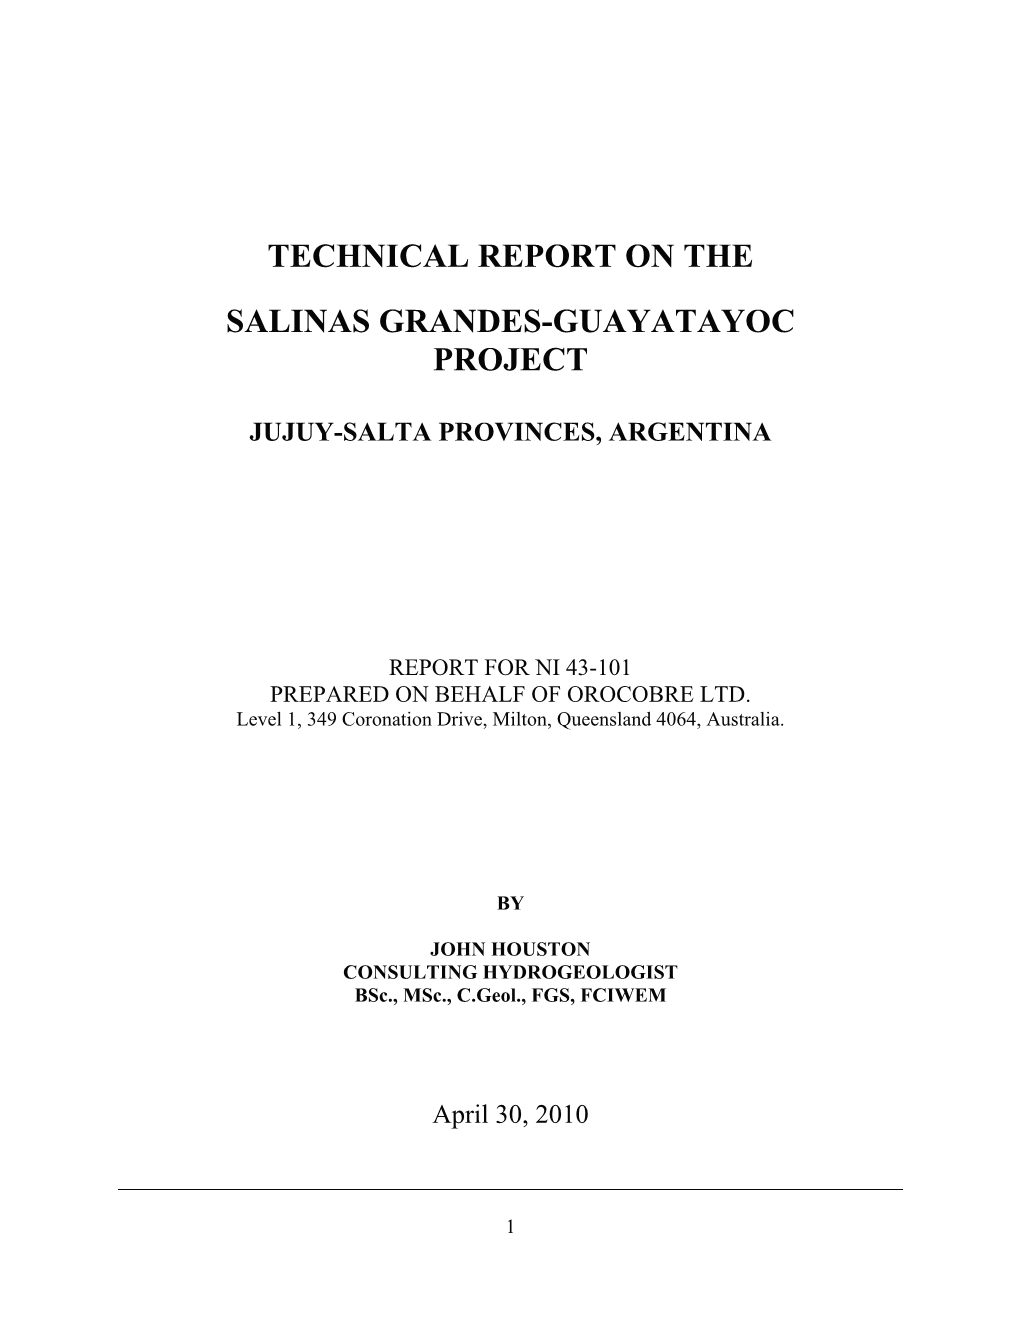 Technical Report on the Salinas Grandes-Guayatayoc Project Jujuy-Salta Provinces, Argentina